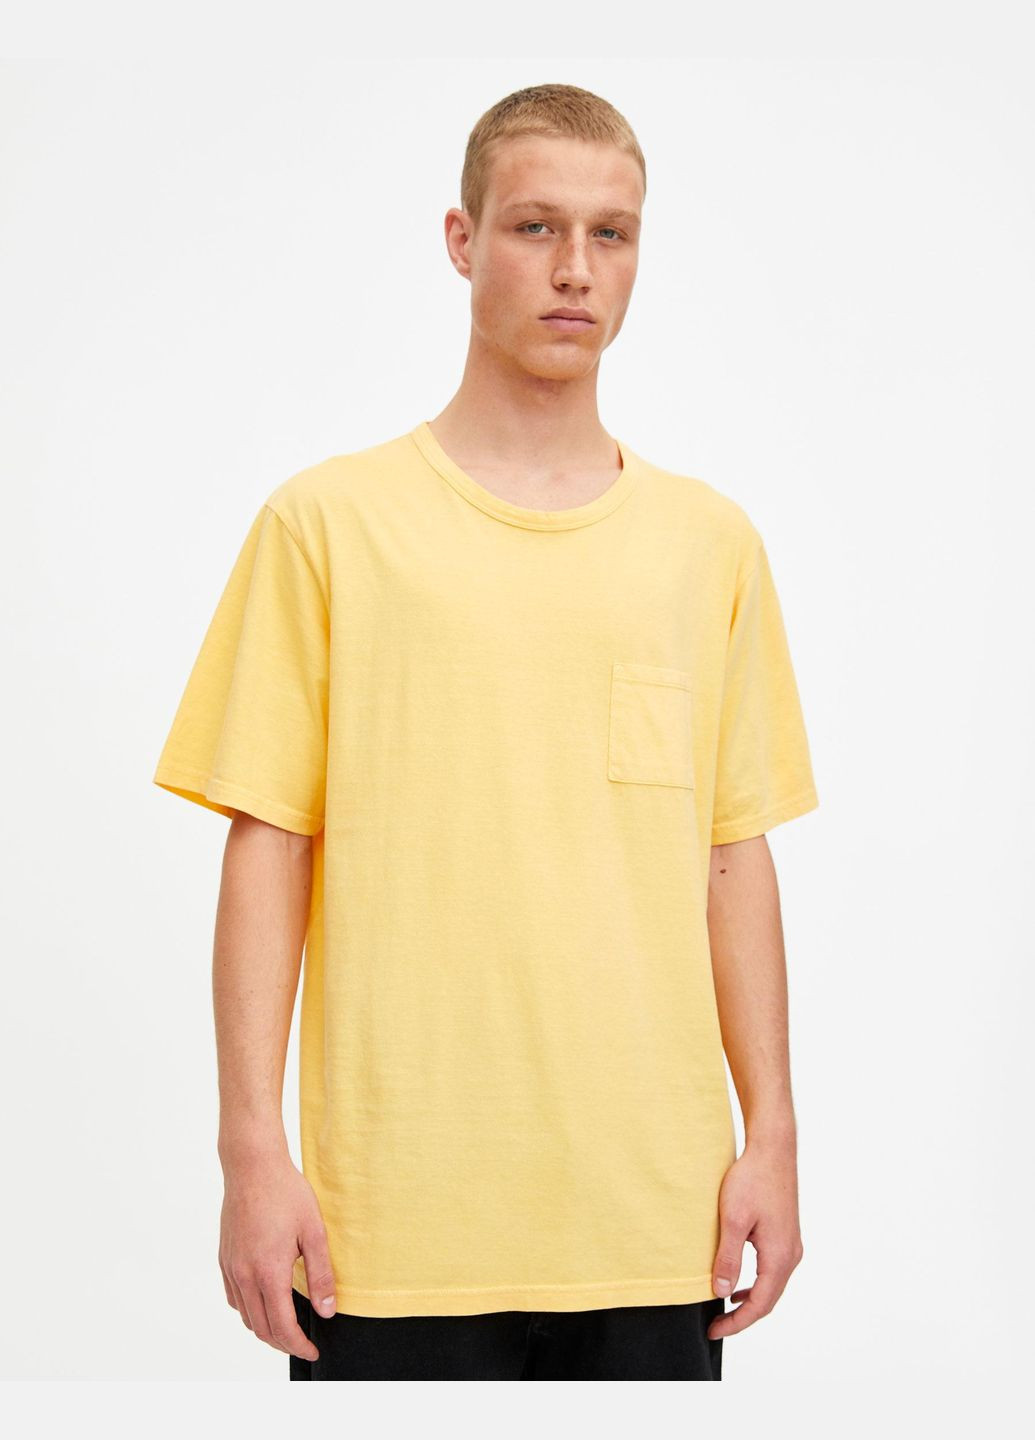 Желтая футболка,желтый, Pull & Bear